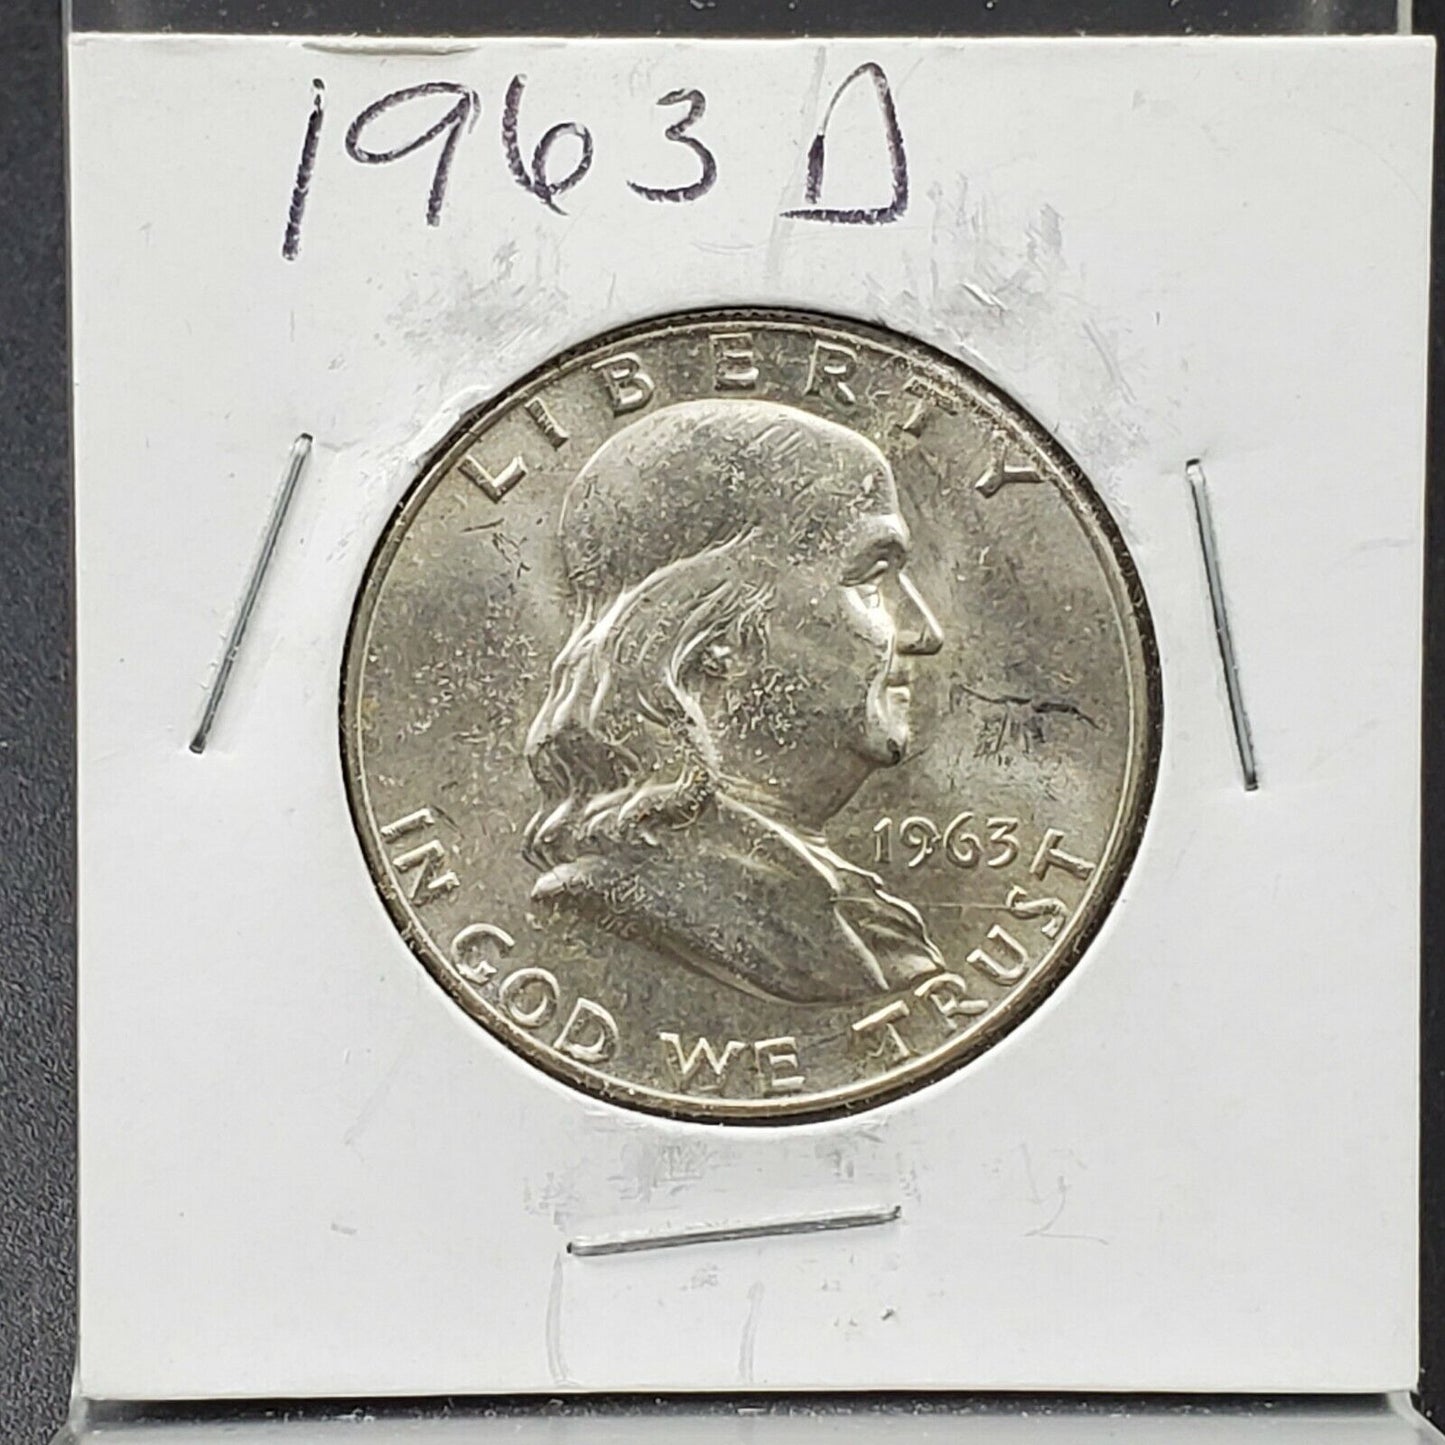 1963 D Franklin Silver Half Dollar Coin Average UNC Uncirculated